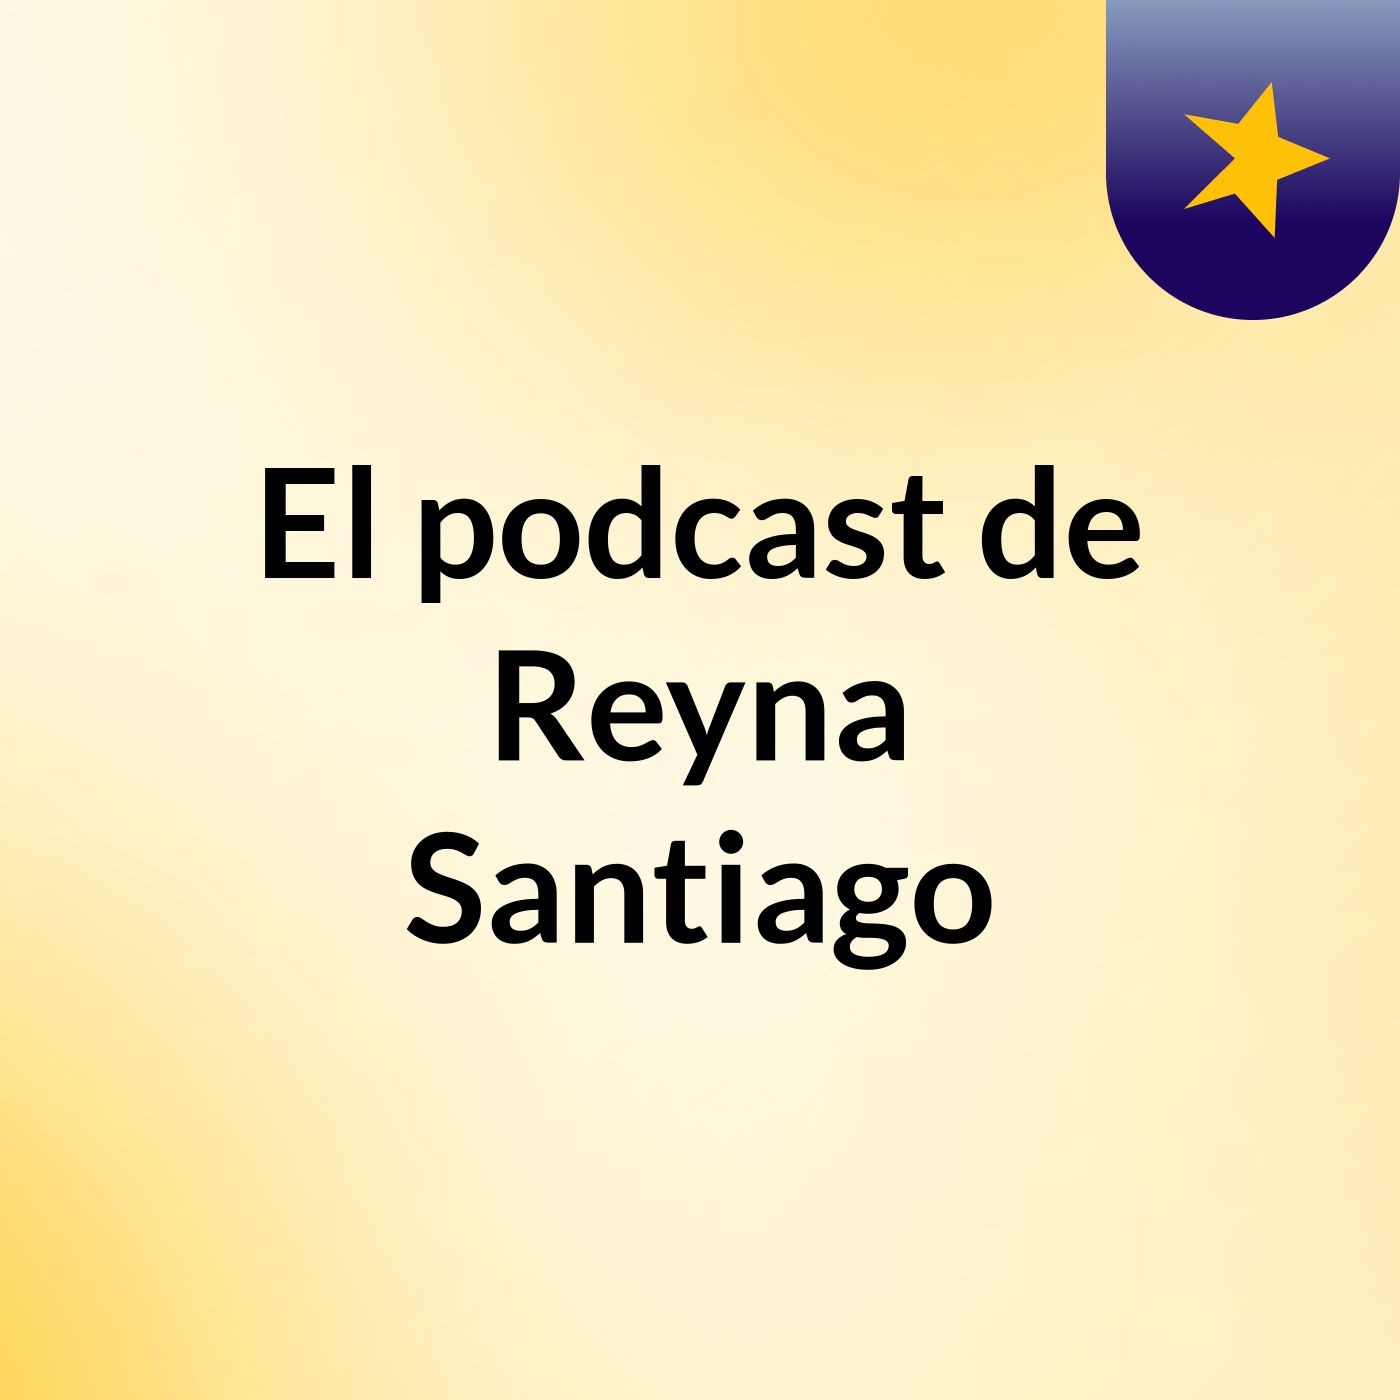 El podcast de Reyna Santiago